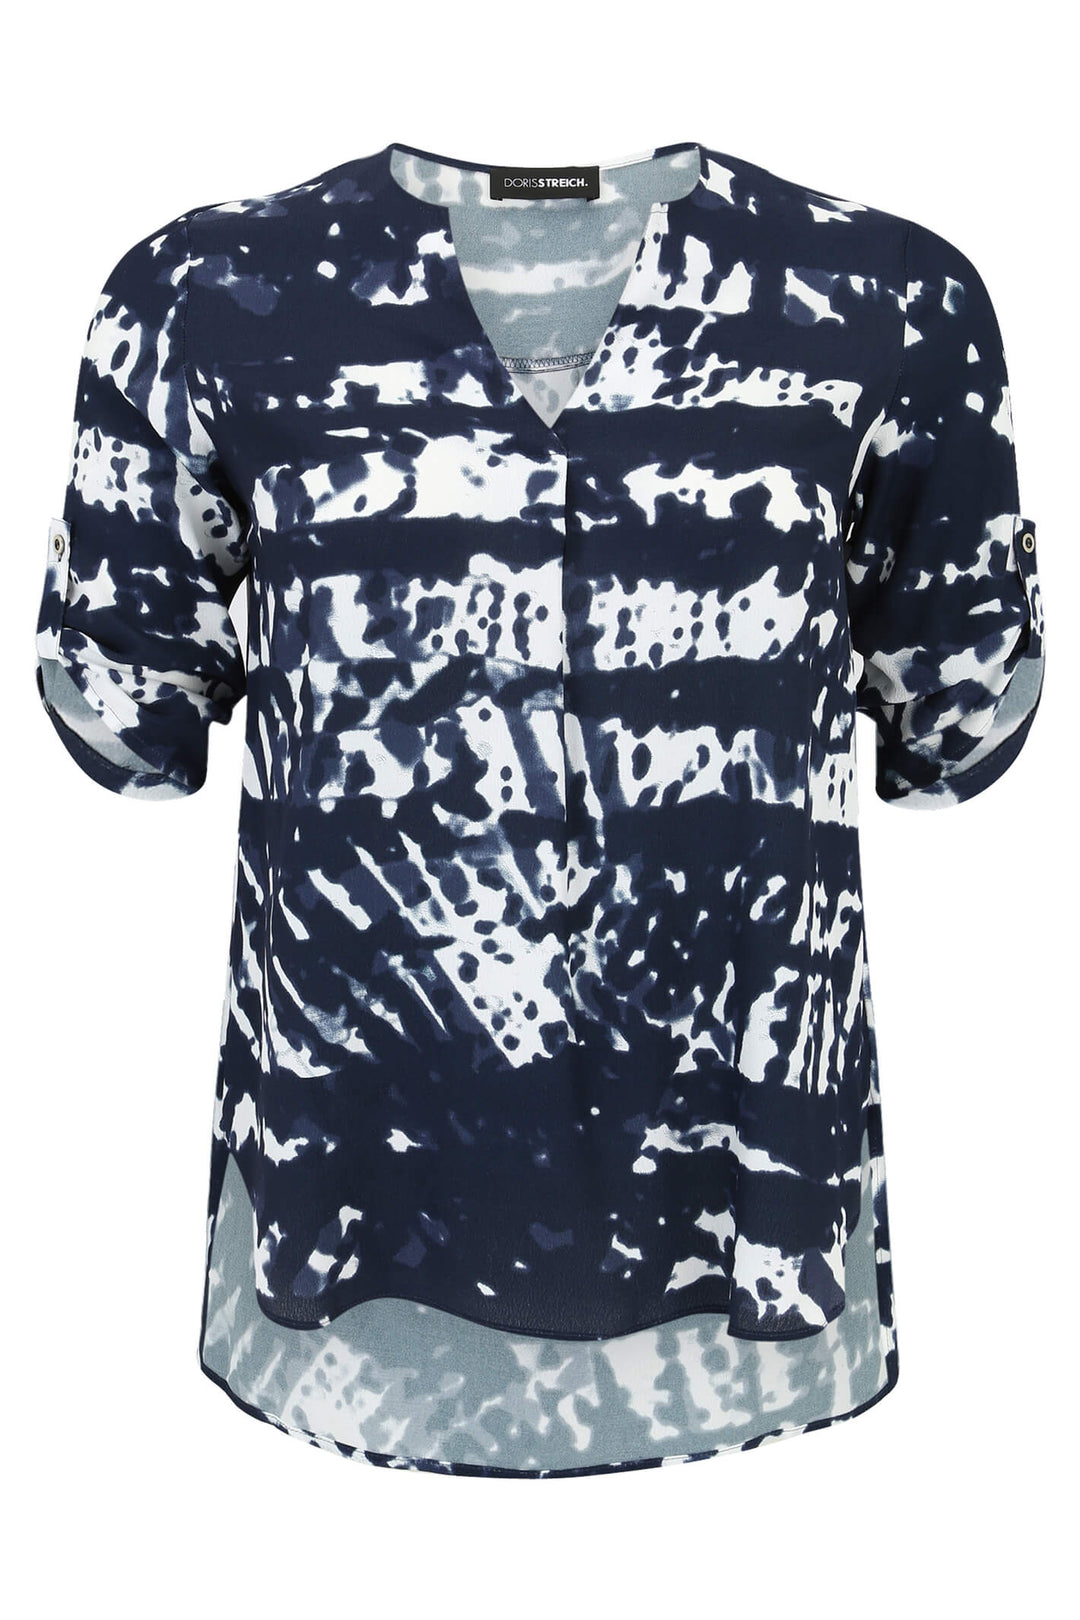 Doris Streich 220 508 Navy Print Shirt Style Blouse - Shirley Allum Boutique